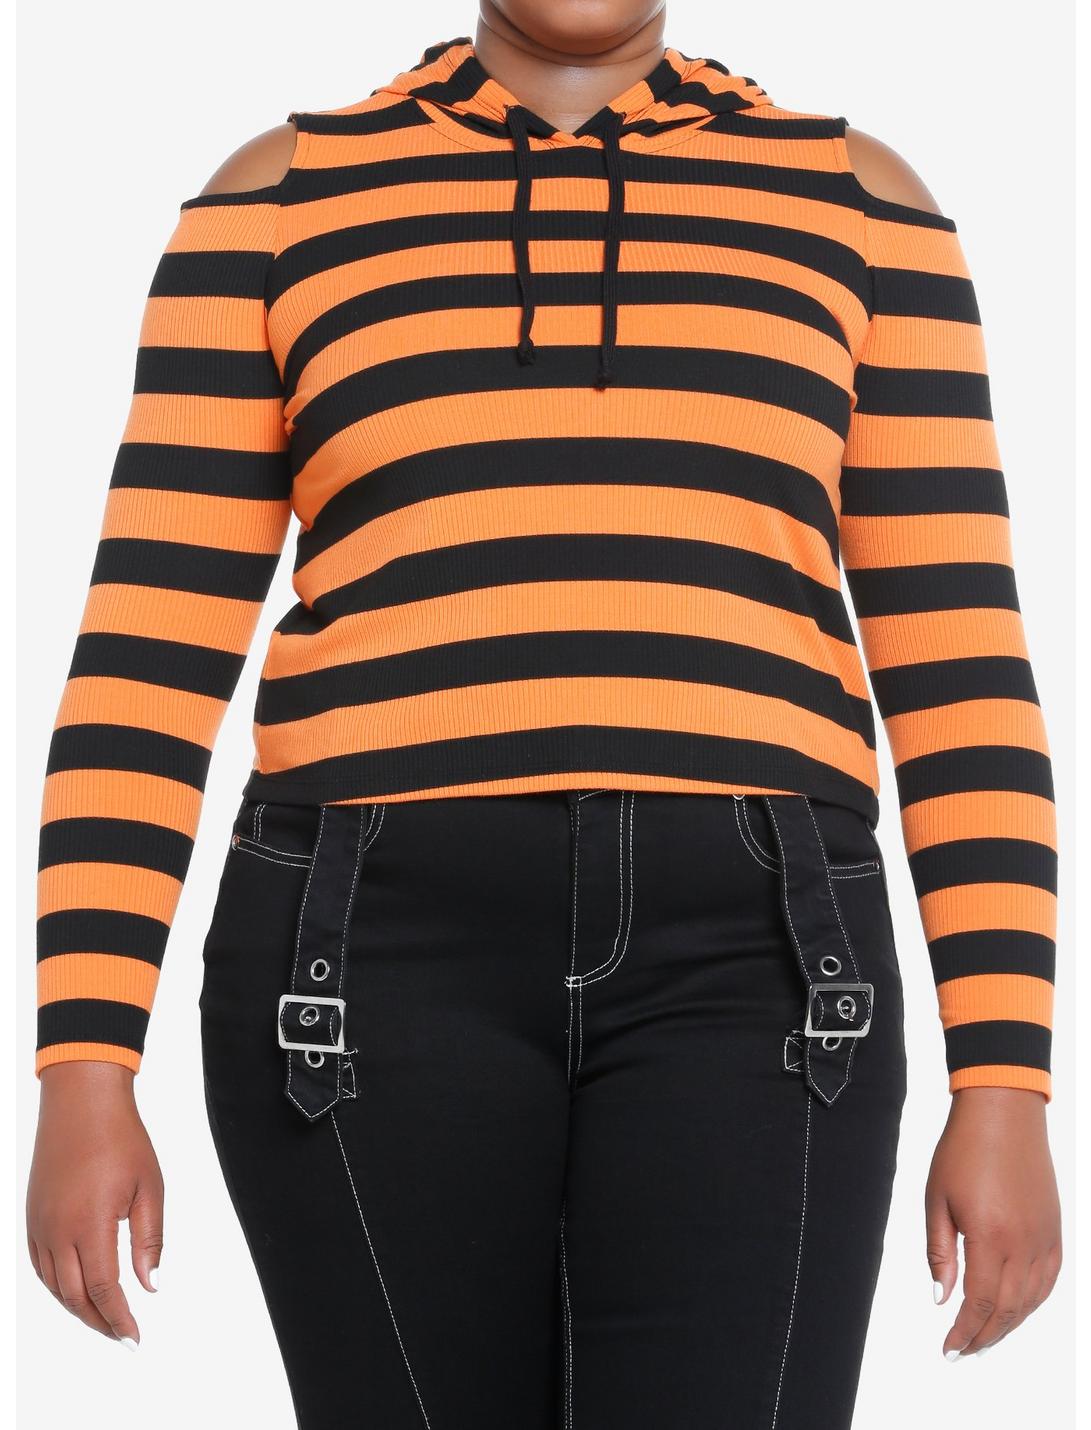 Social Collision Black & Orange Stripe Girls Crop Hooded Top Plus Size, STRIPES - ORANGE, hi-res